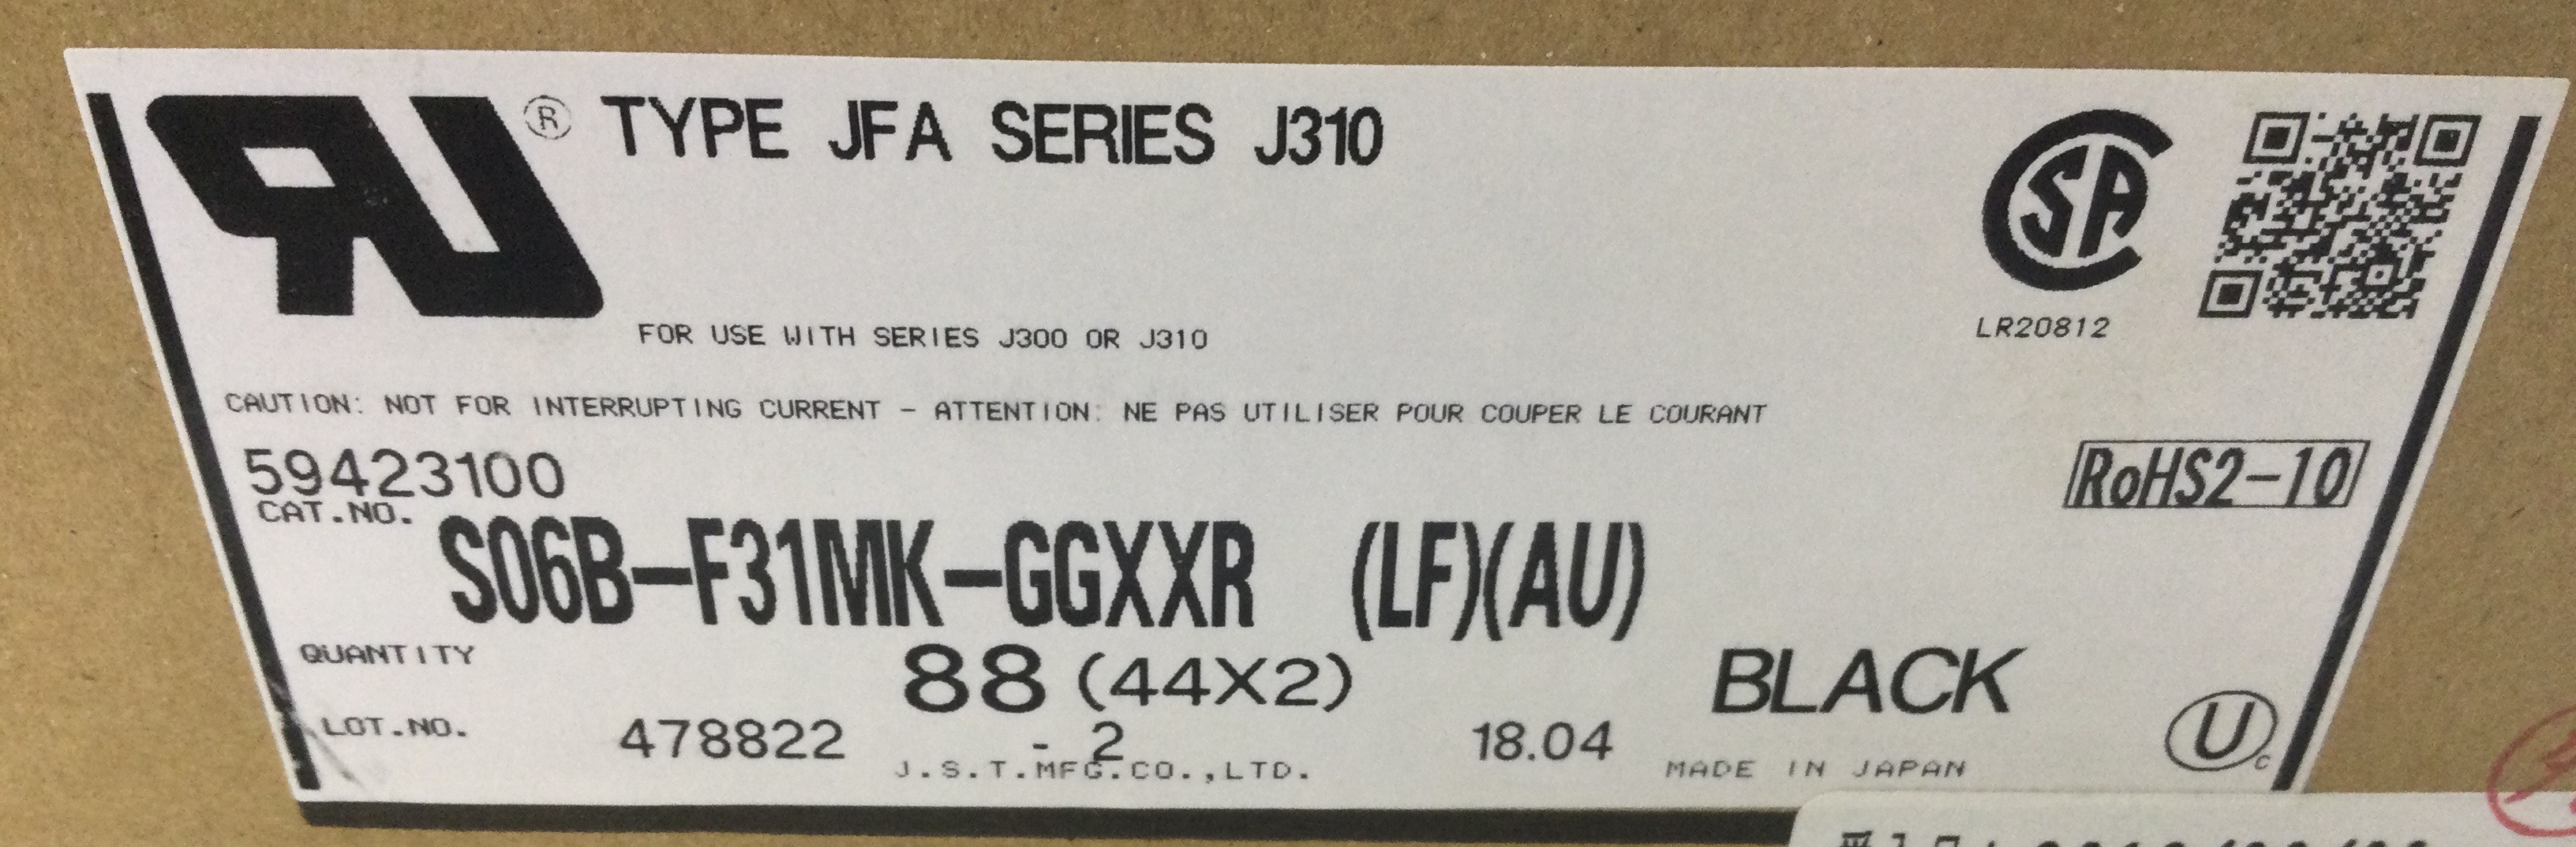 S06B-F31MK-GGXXR(LF)(AU)